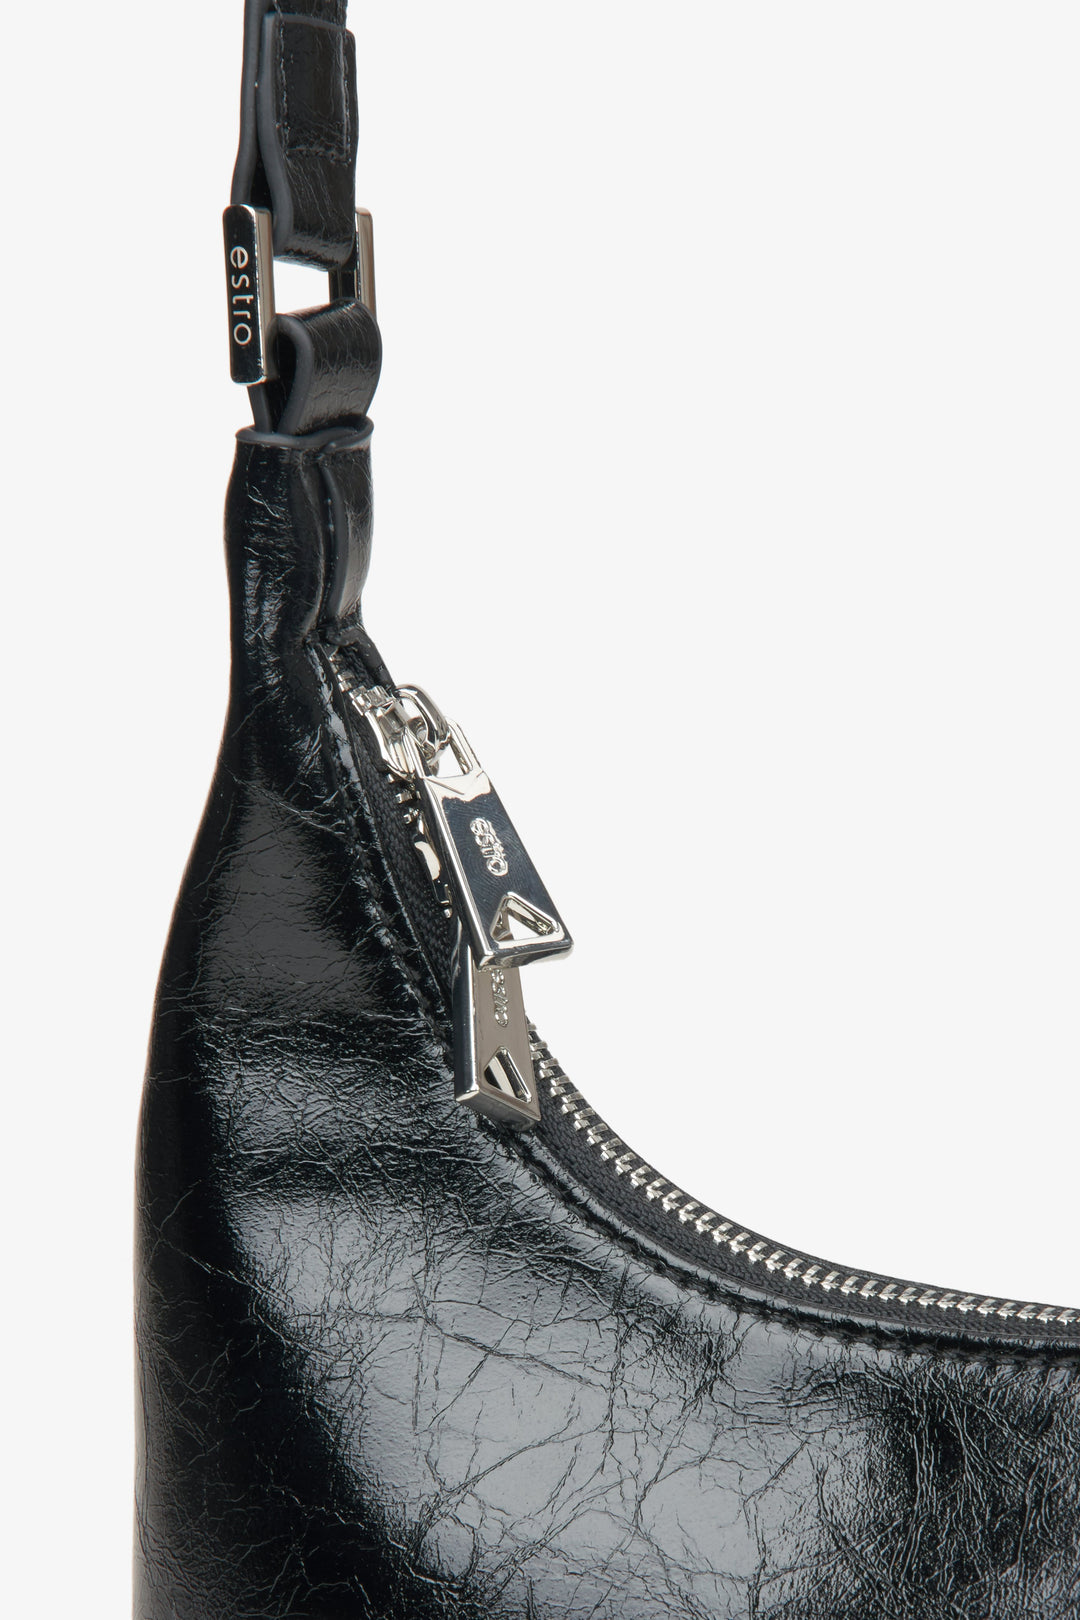 Women's black handbag - a close-up on details.